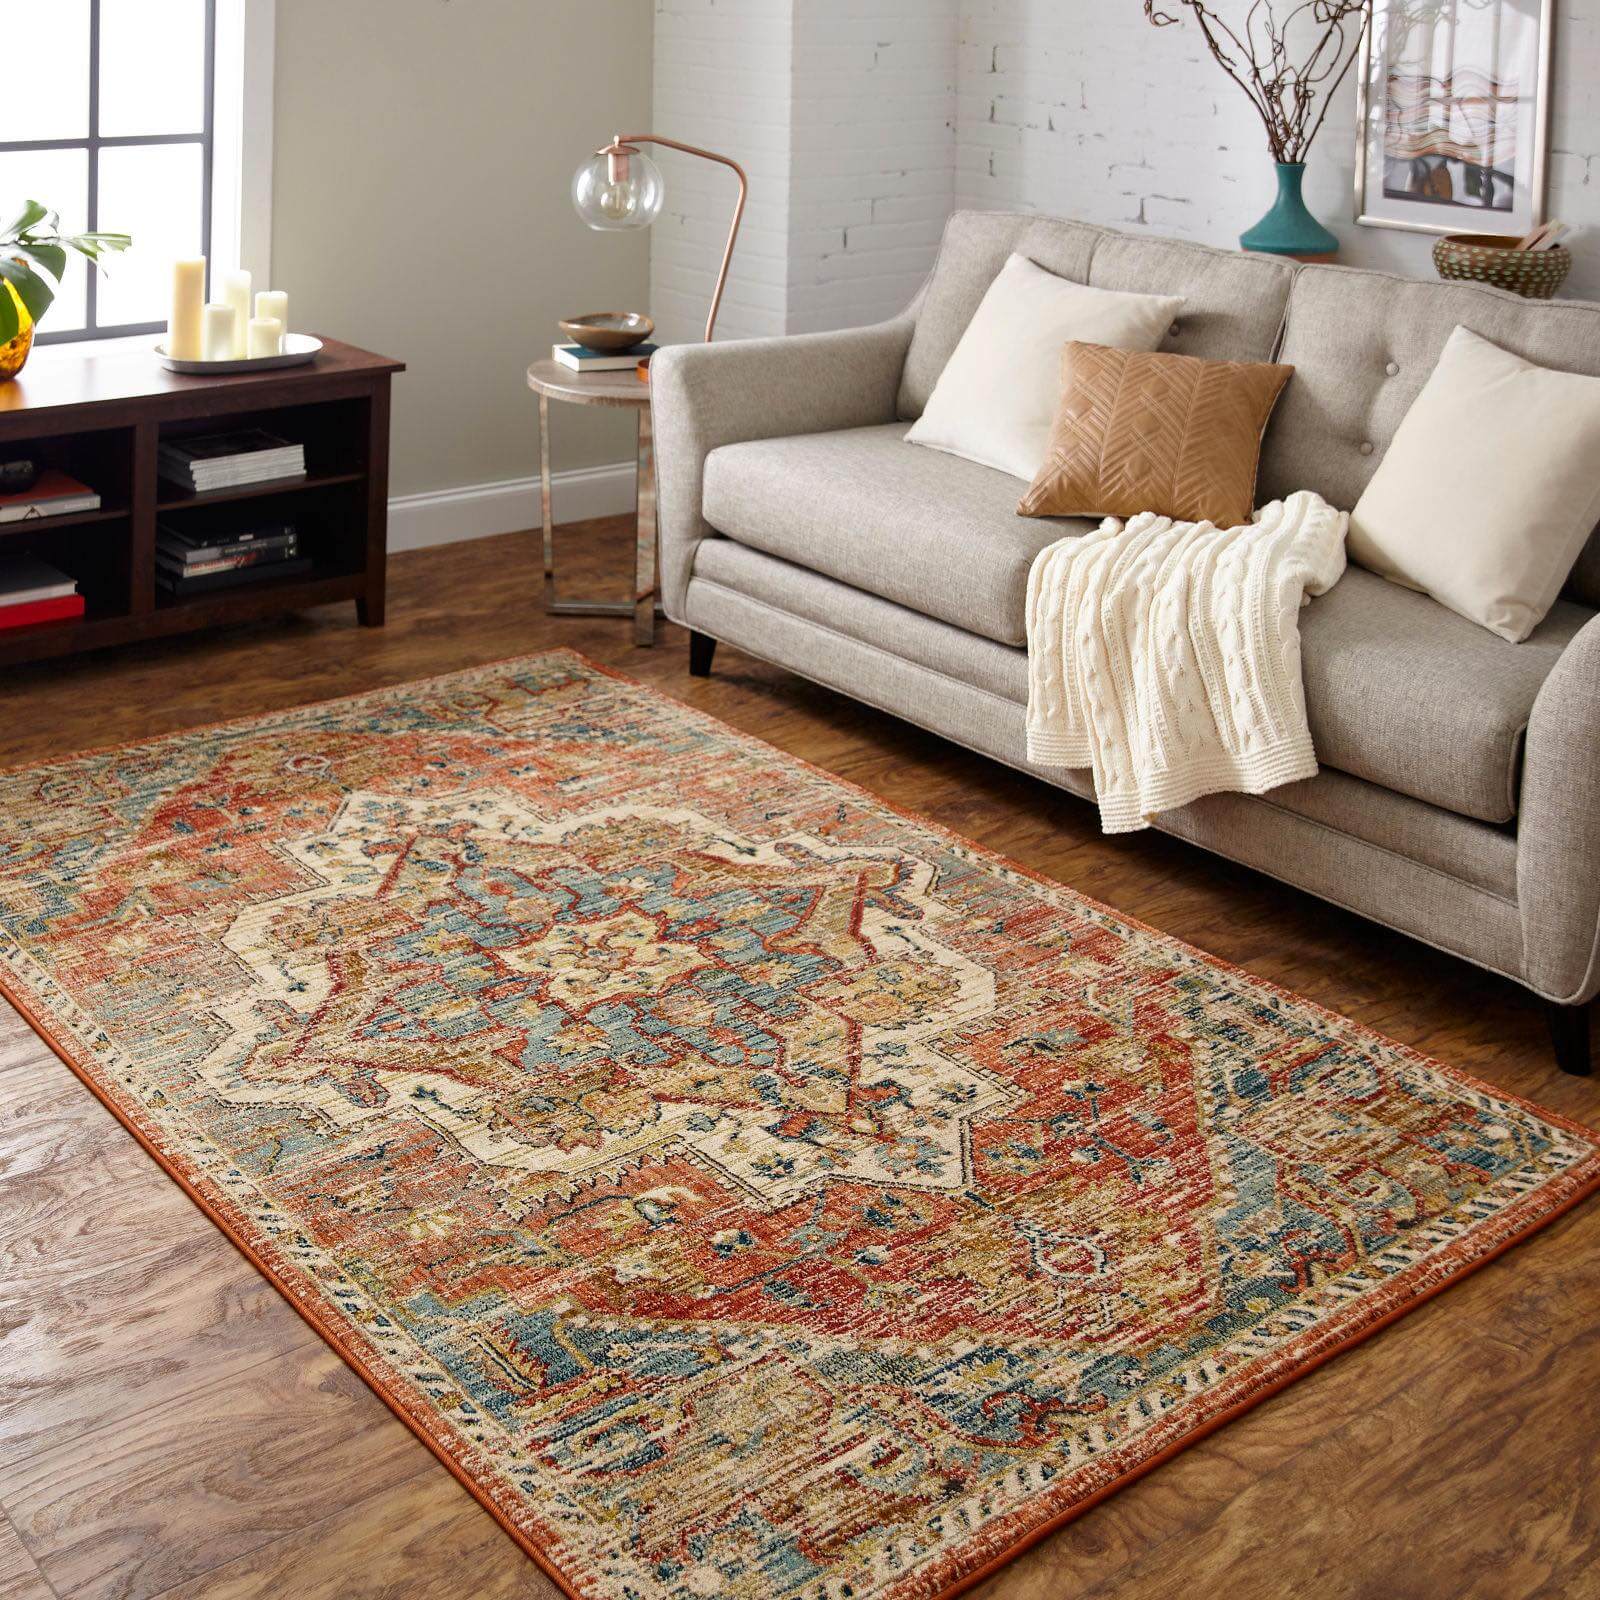 Brown Area Rug Living Room | Location Carpet